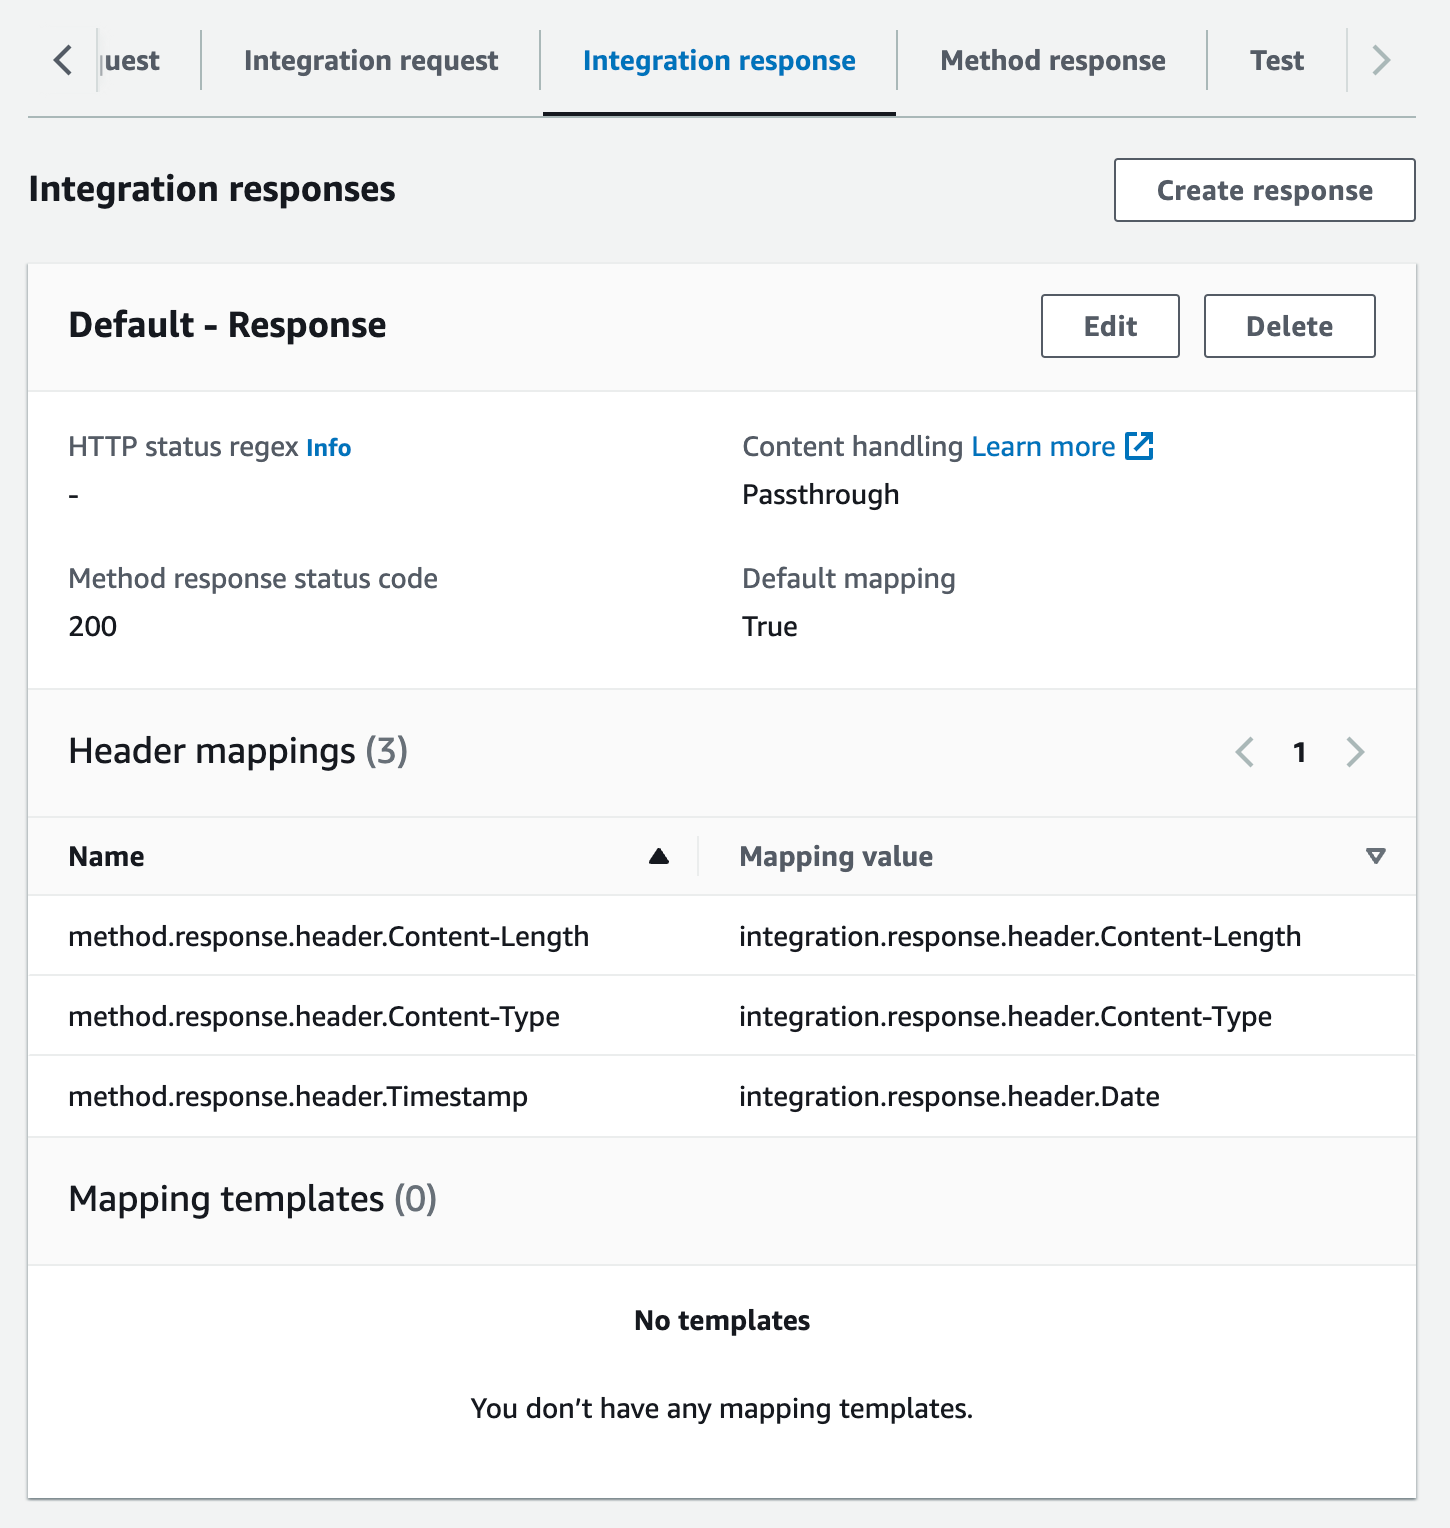 
                Map integration response headers to method response headers
              